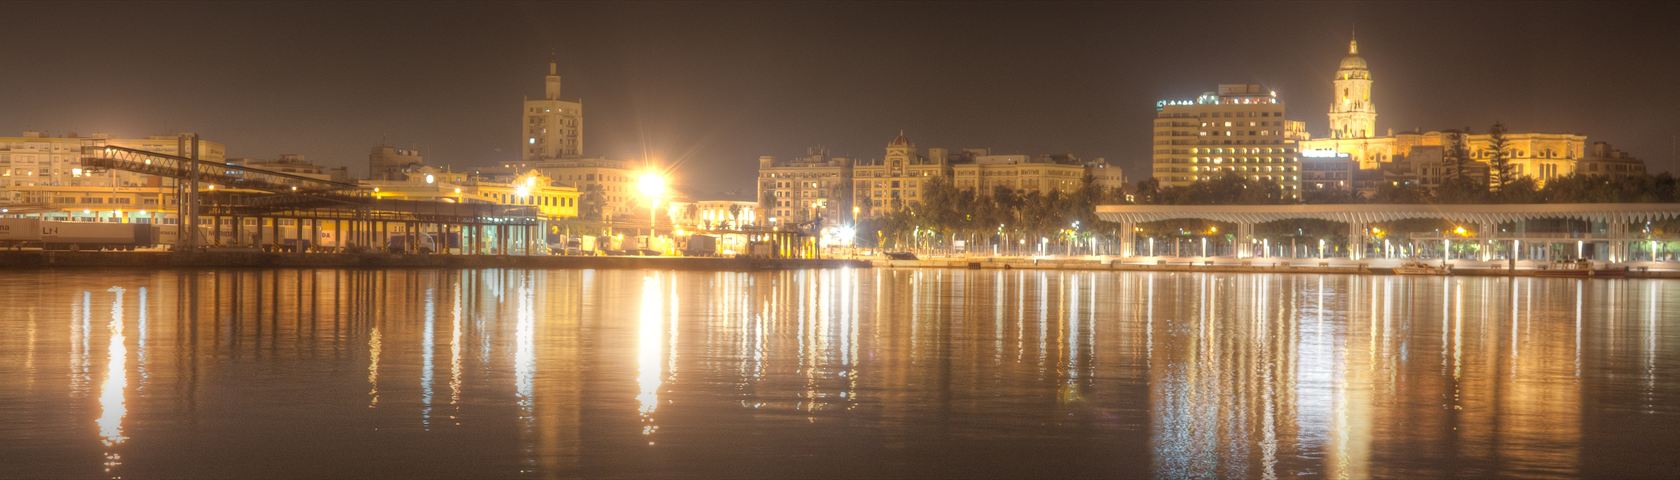 Malaga Landscape at Night